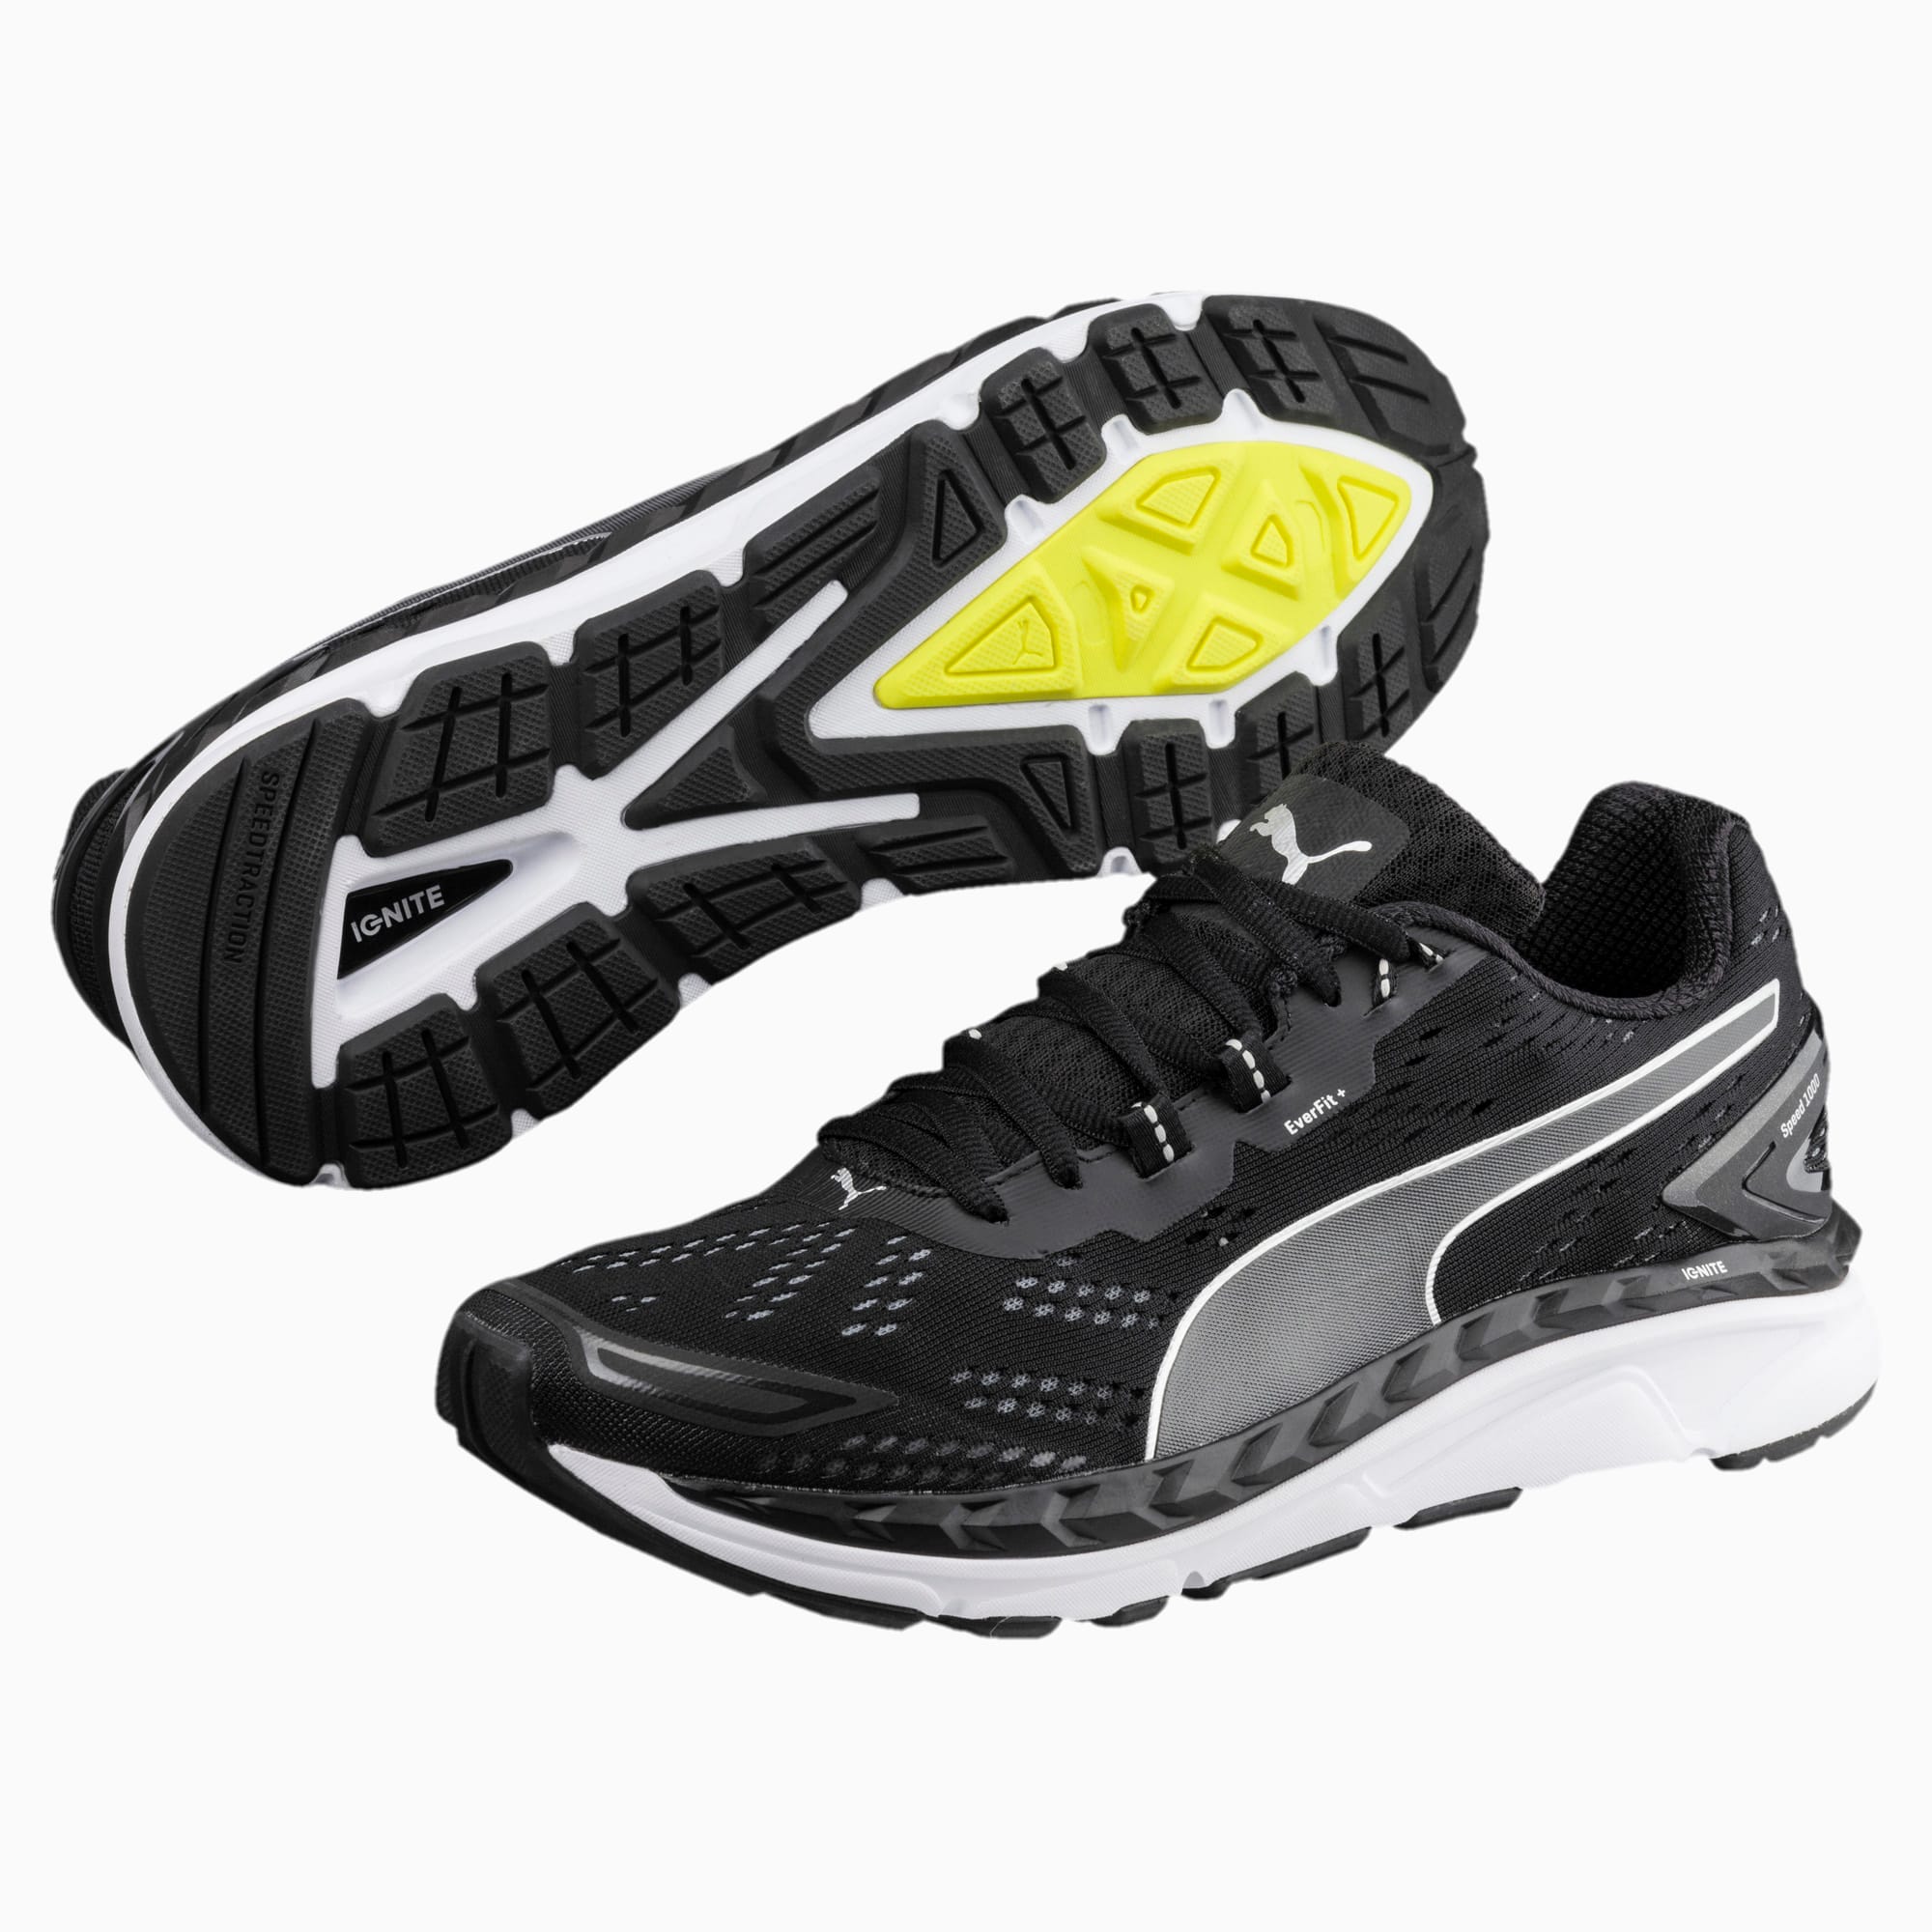 Speed 1000 IGNITE Men's Running Shoes 